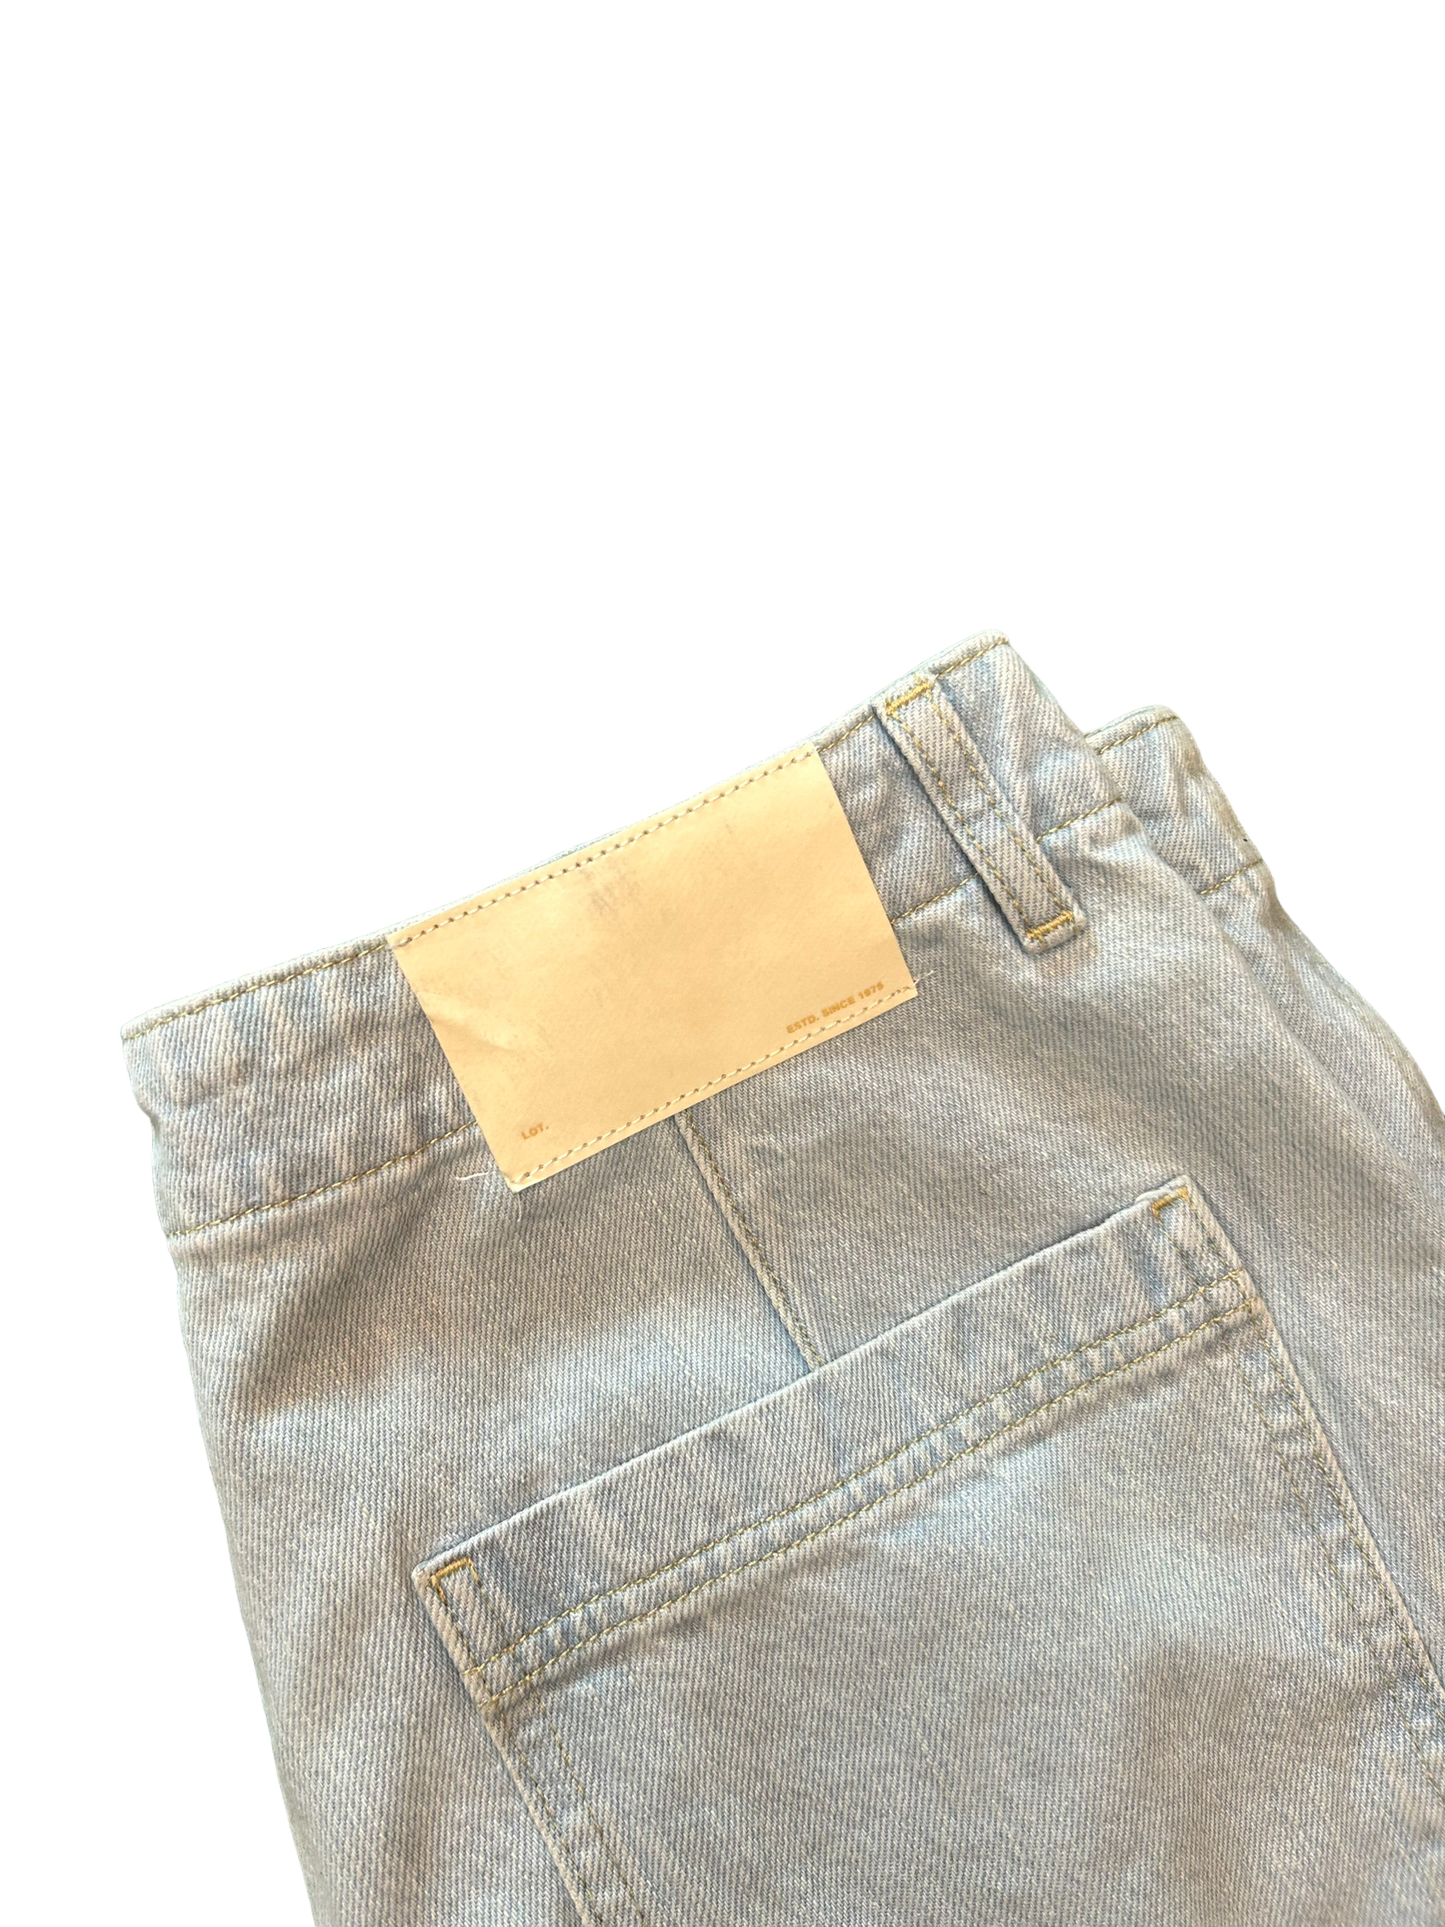 Zara acid-wash denim jeans